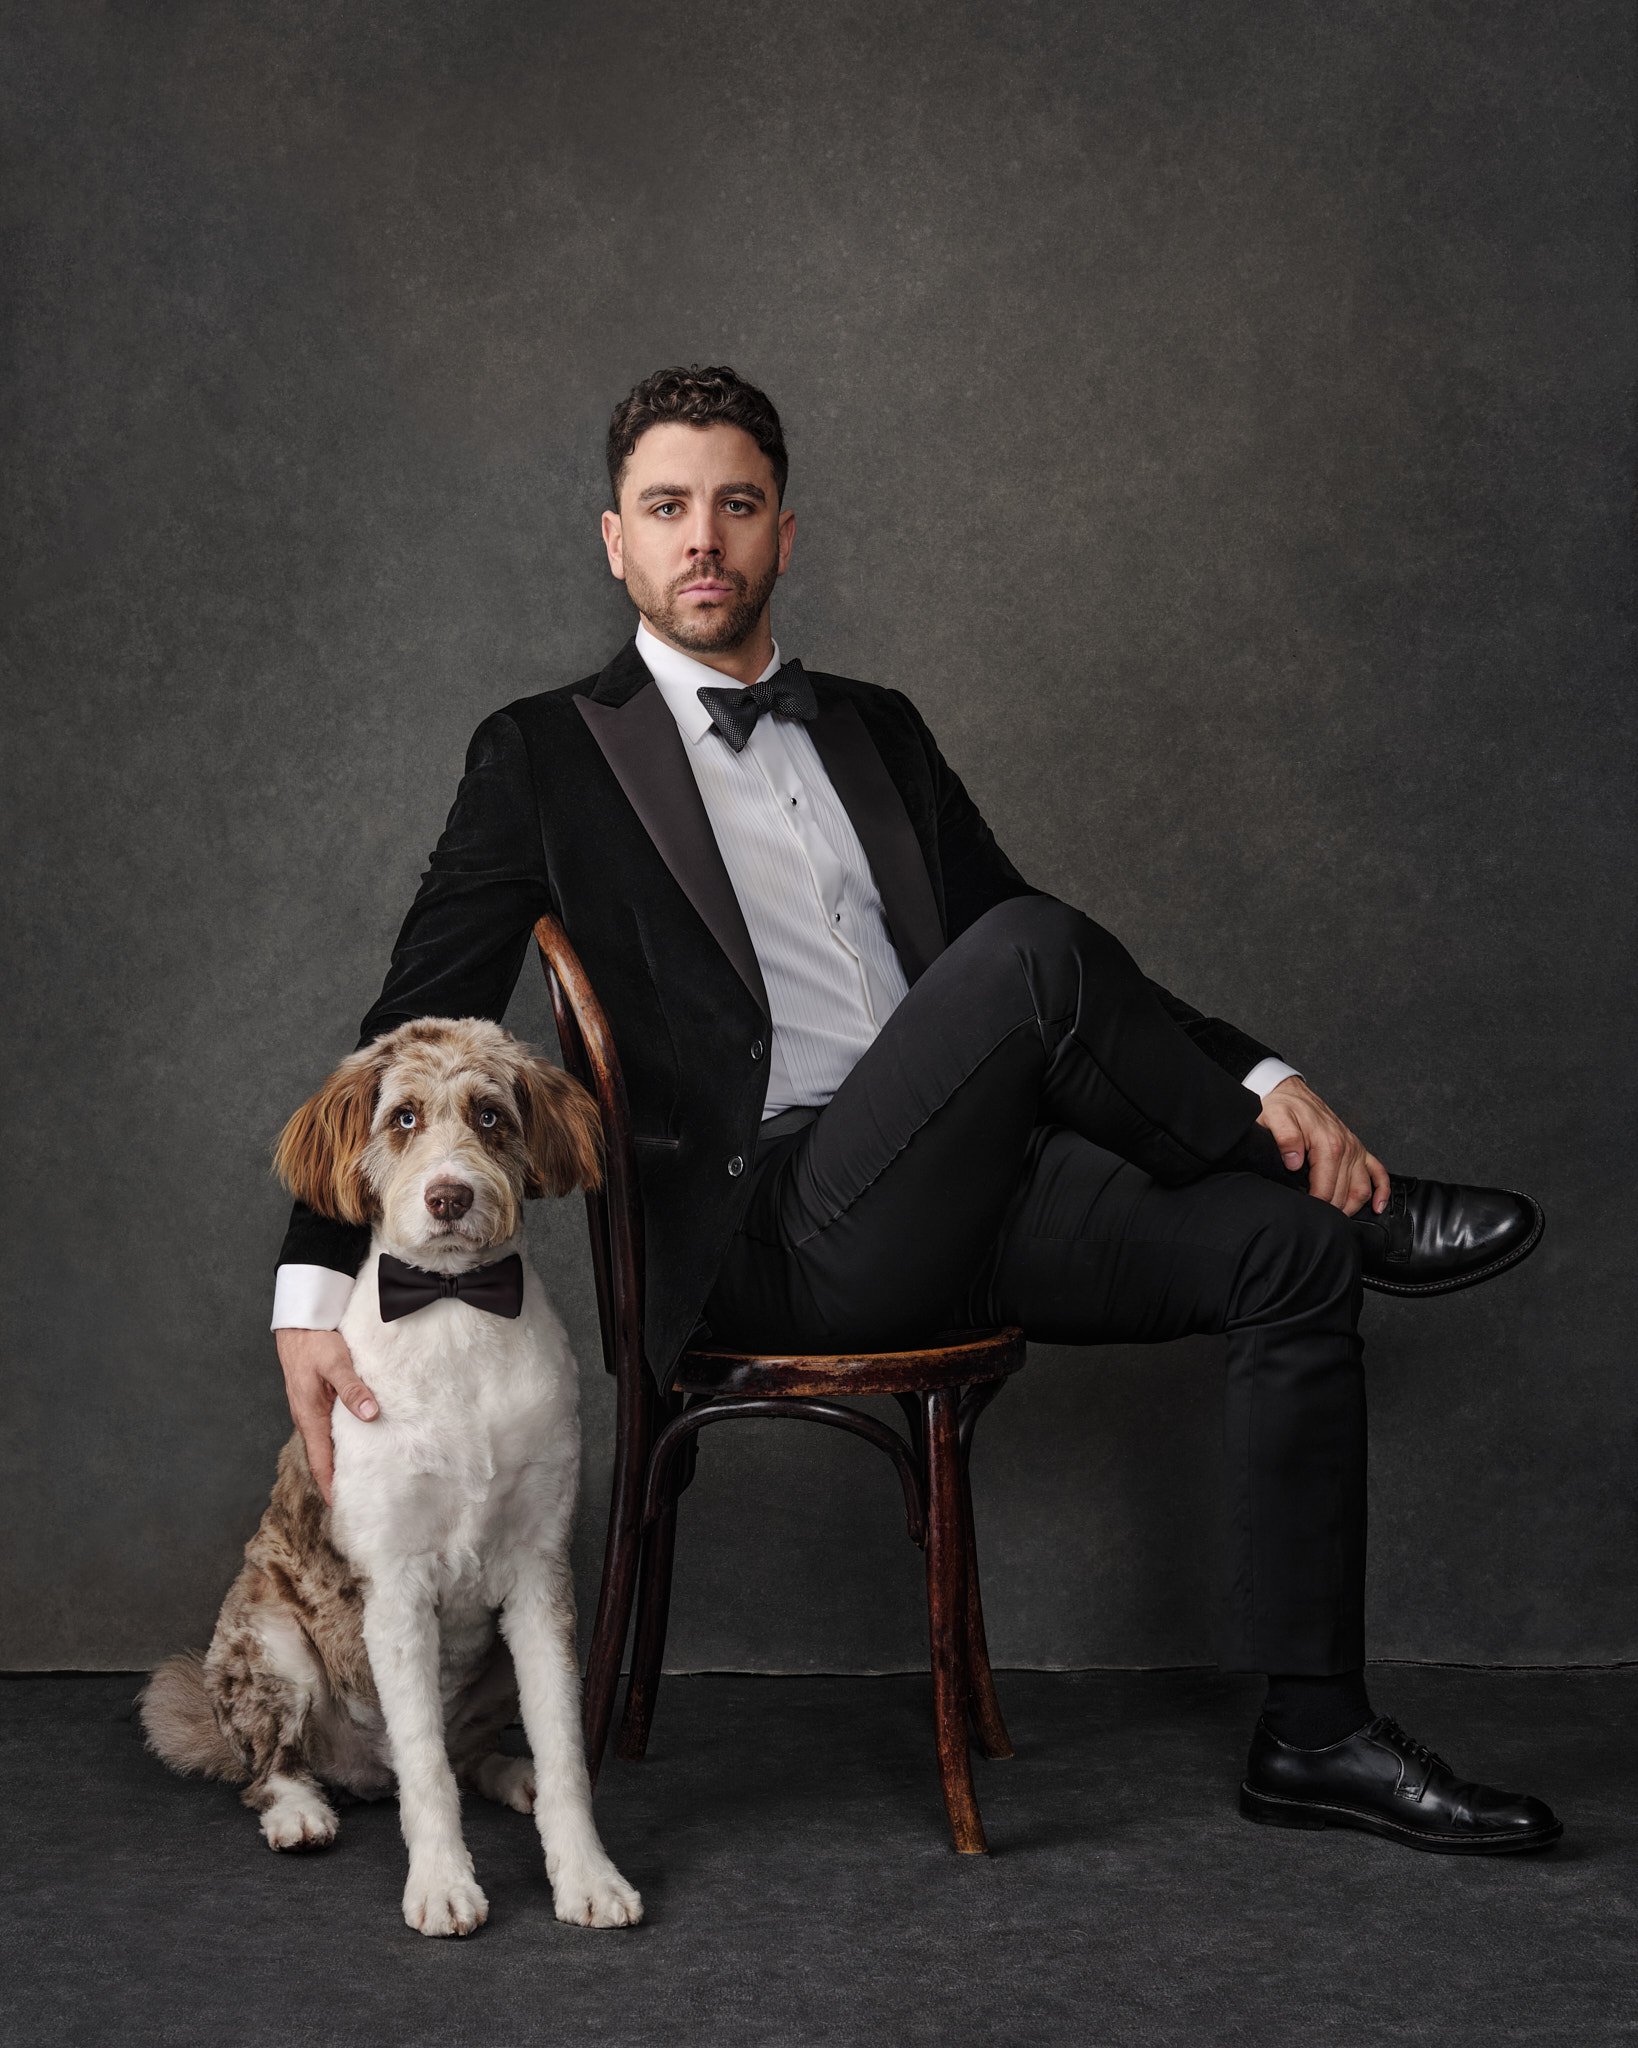 Man-with-dog-wearing-tuxedos-studio-portrait.jpg